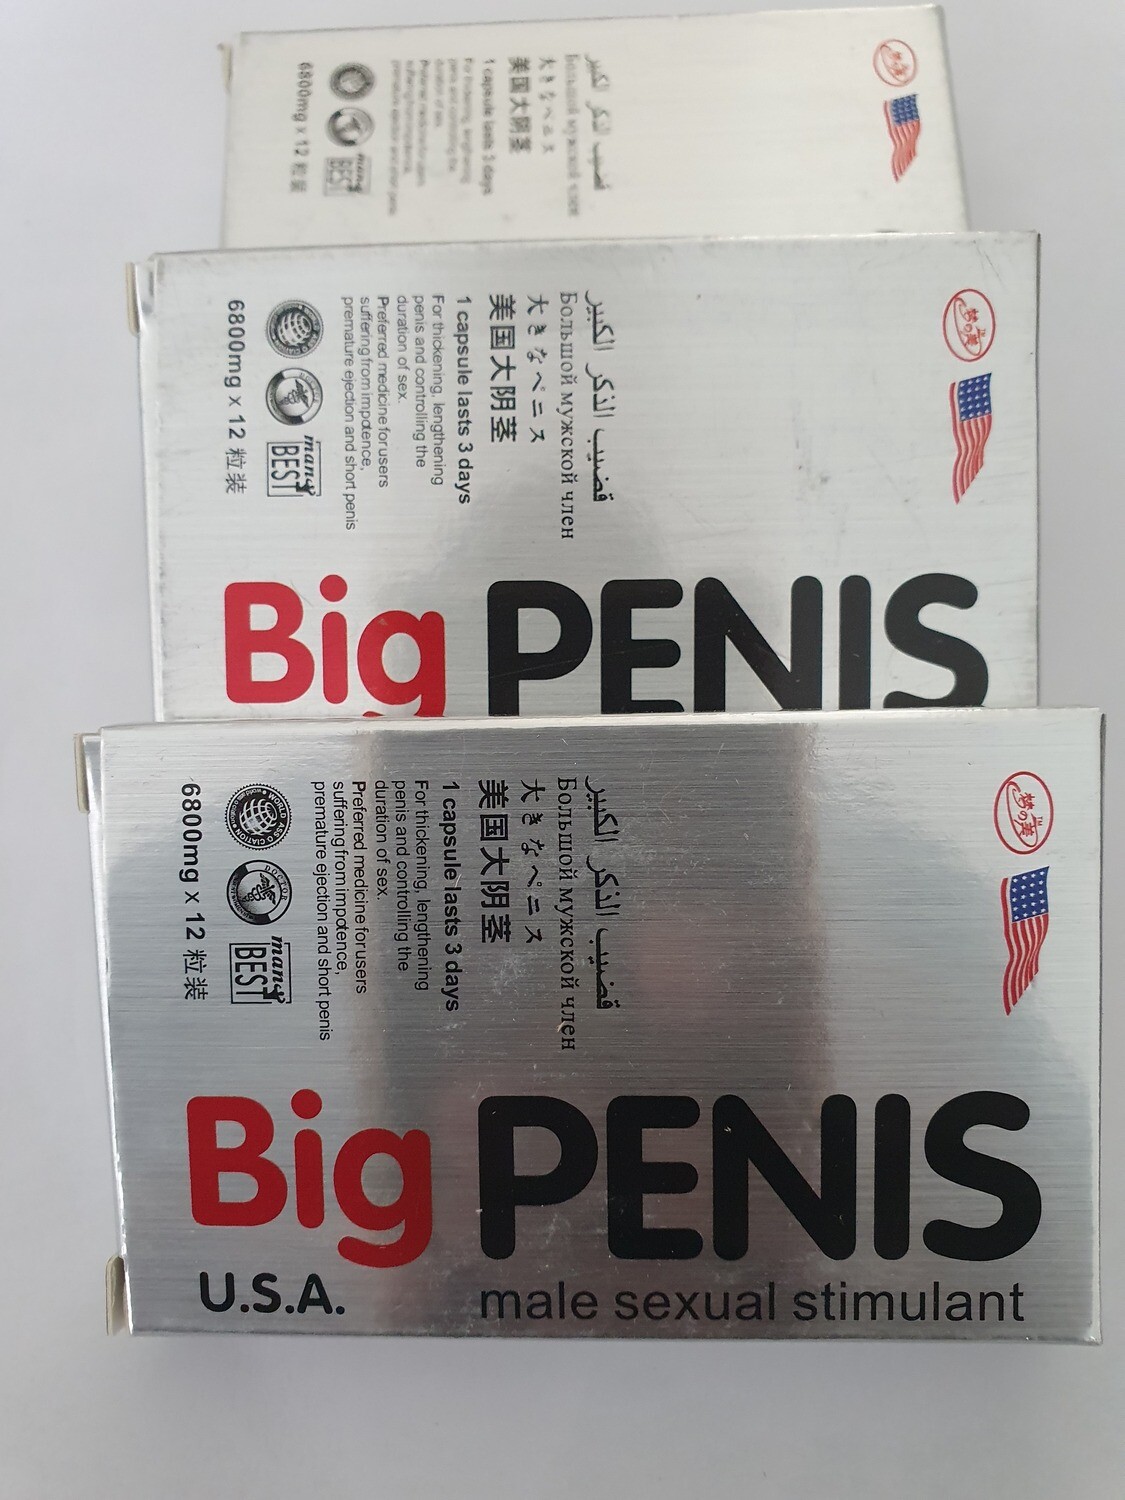 Big PENIS Male Sexual Stimulant-6800mg x 12 pills/box